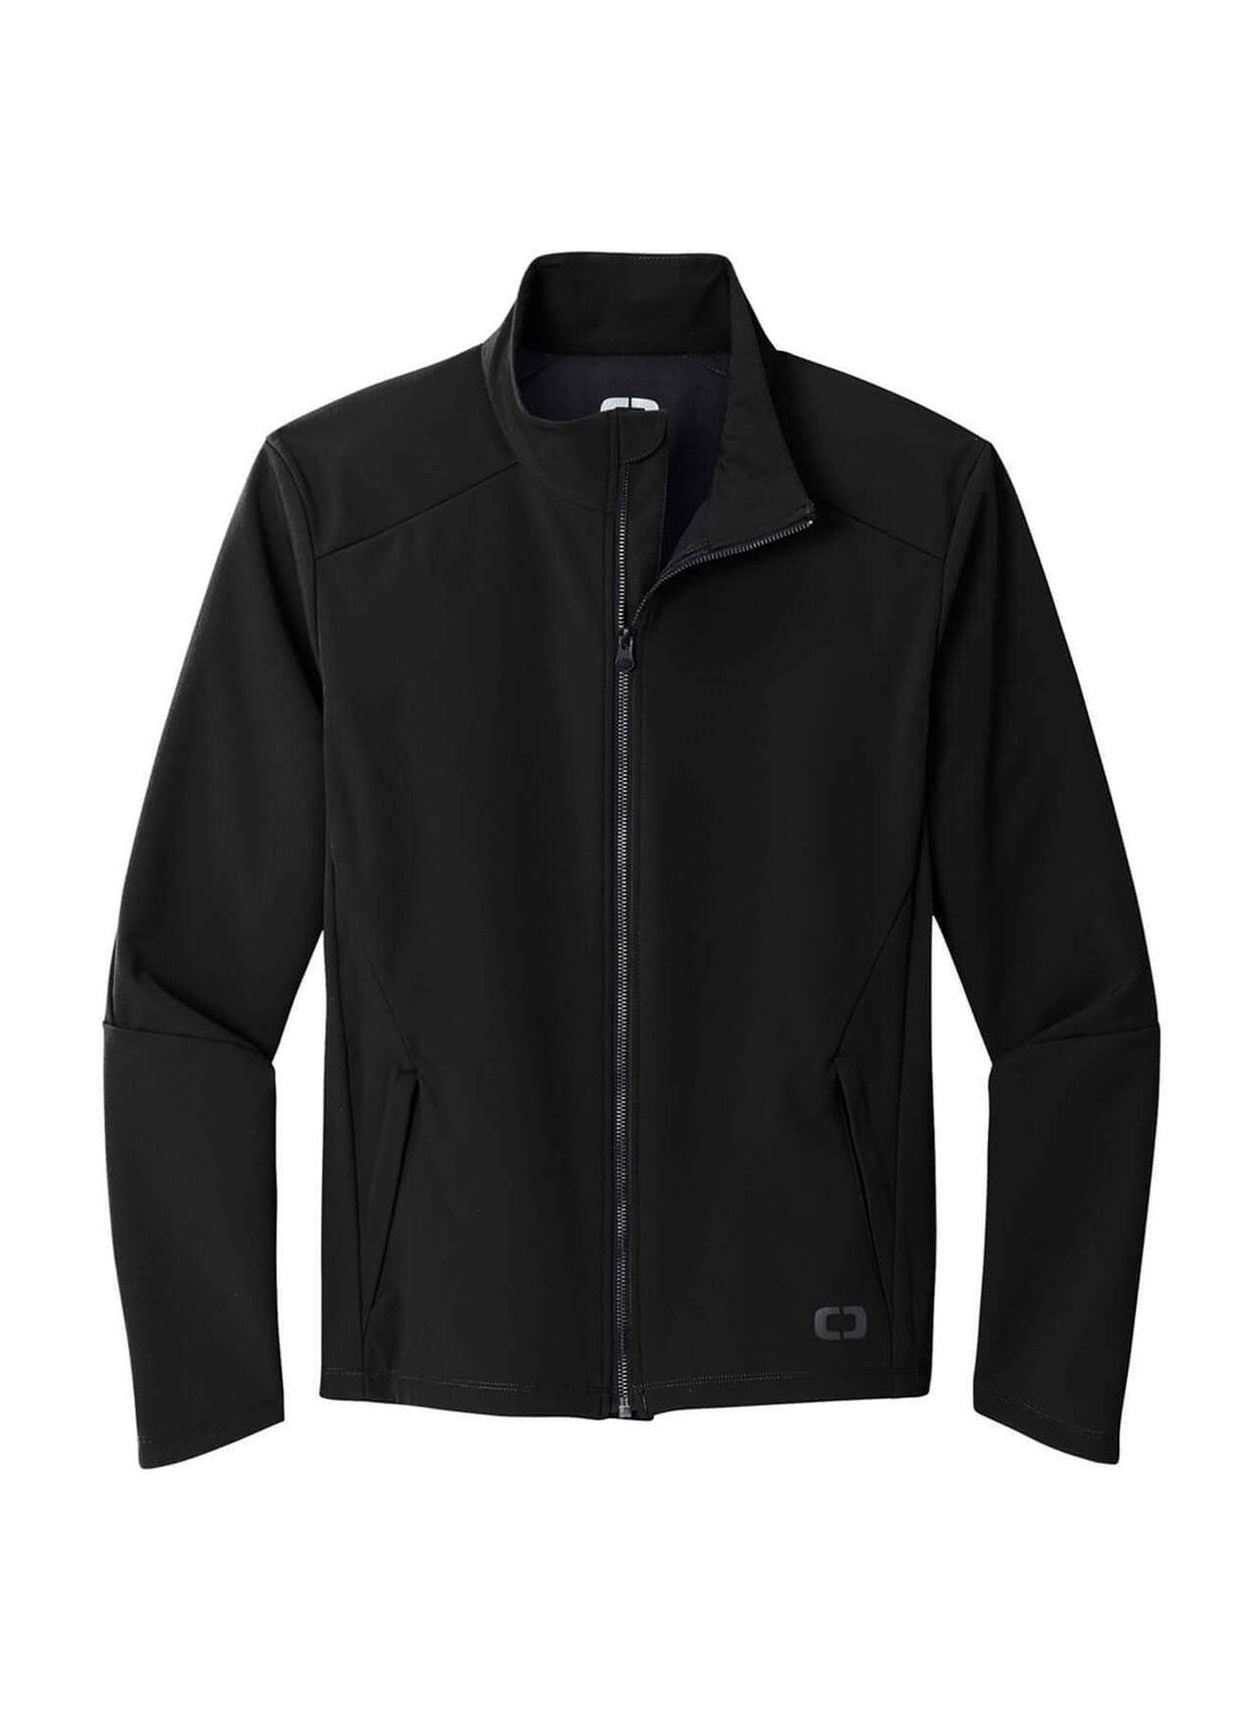 OGIO Men's Blacktop Commuter Soft Shell Jacket